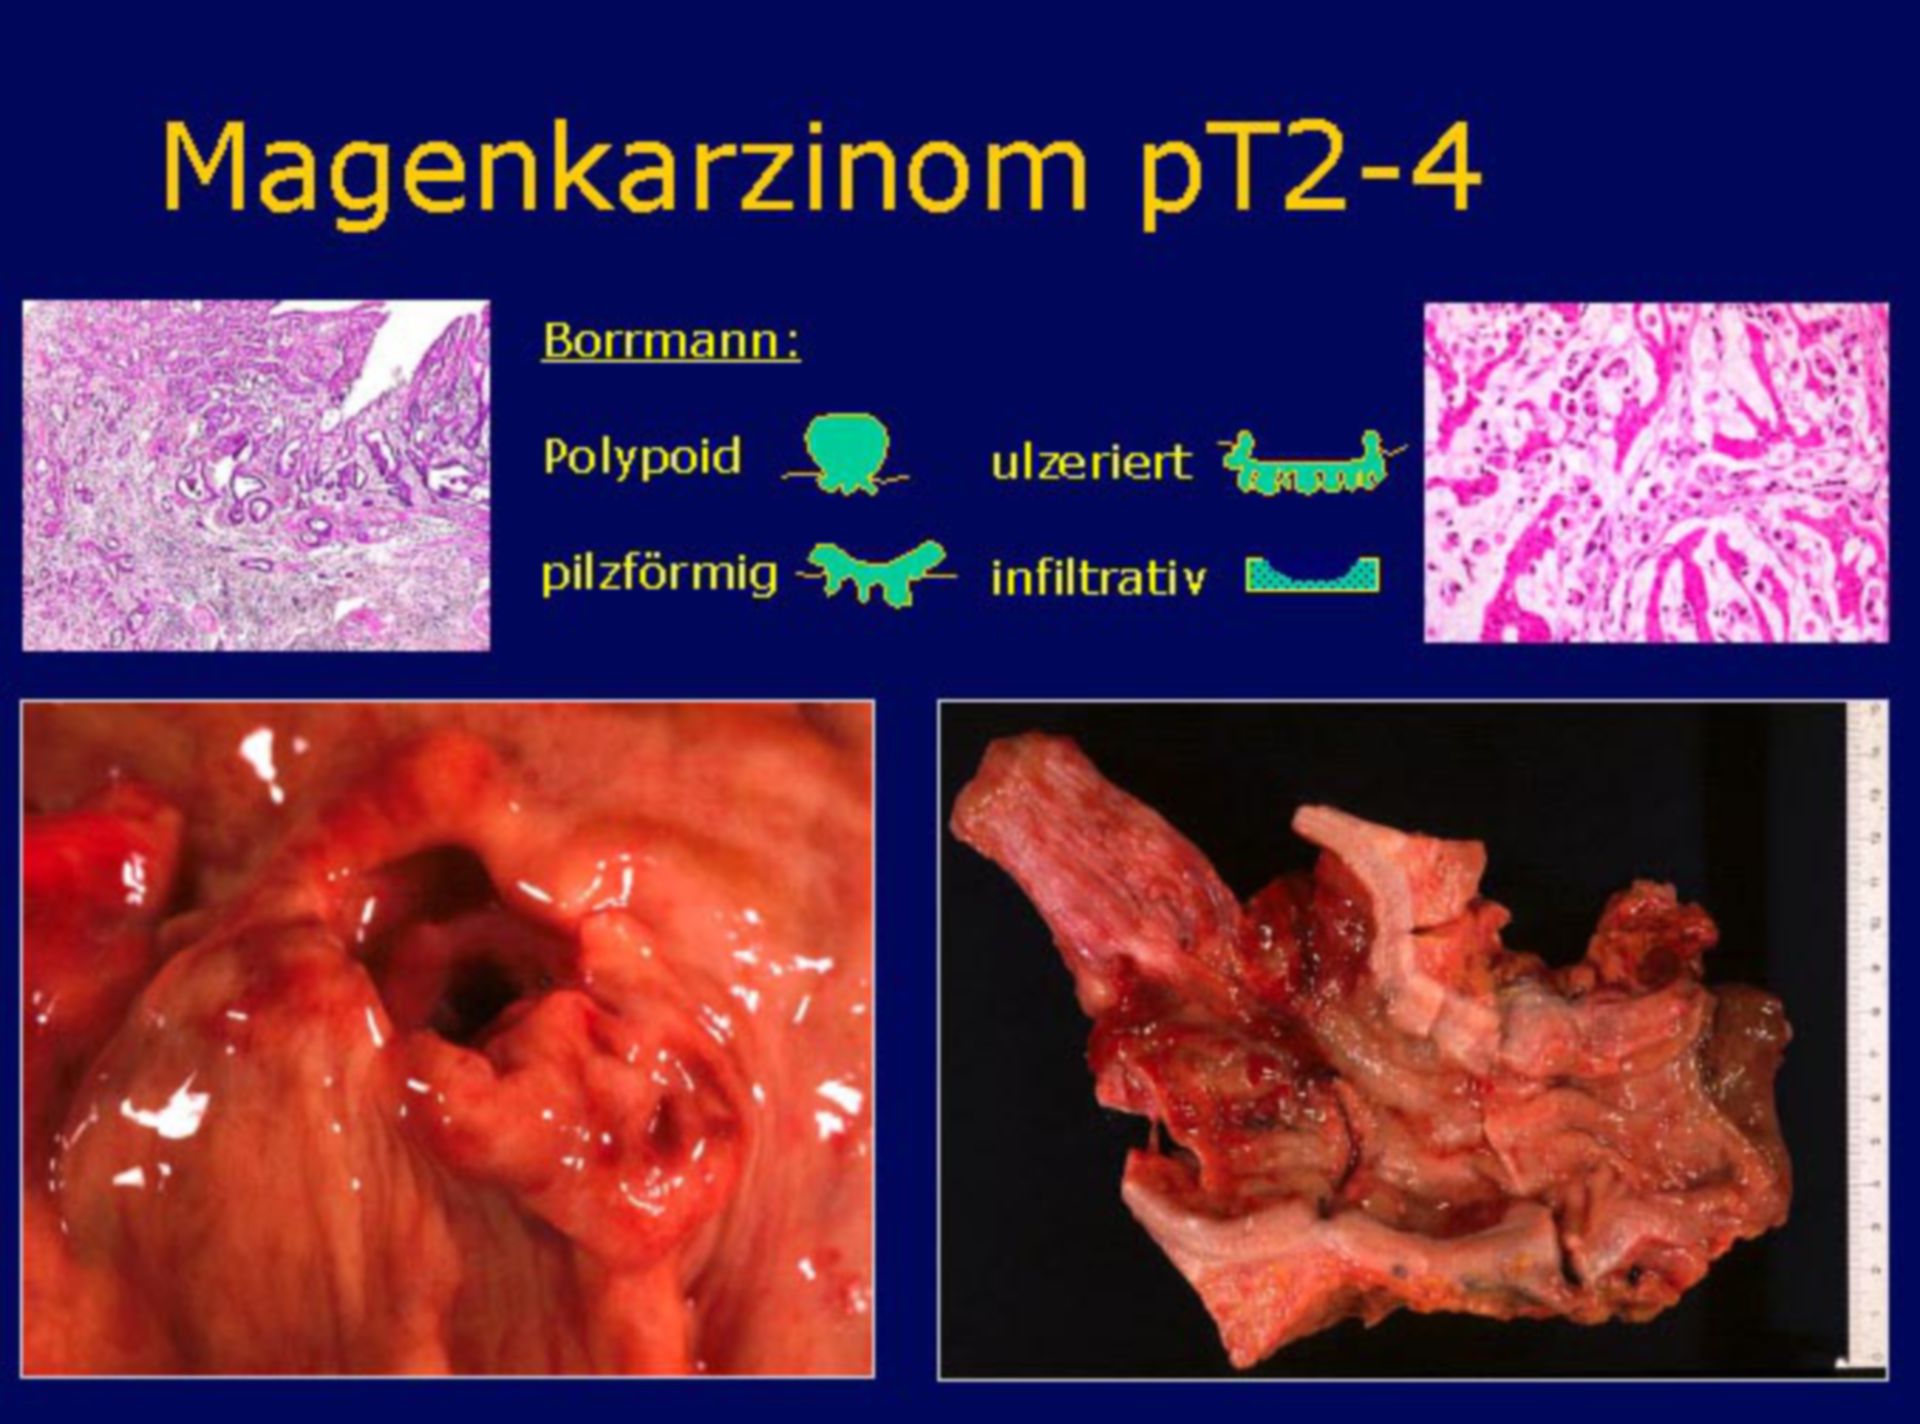 Macroscopic classification of stomach cancer afer Borrmann